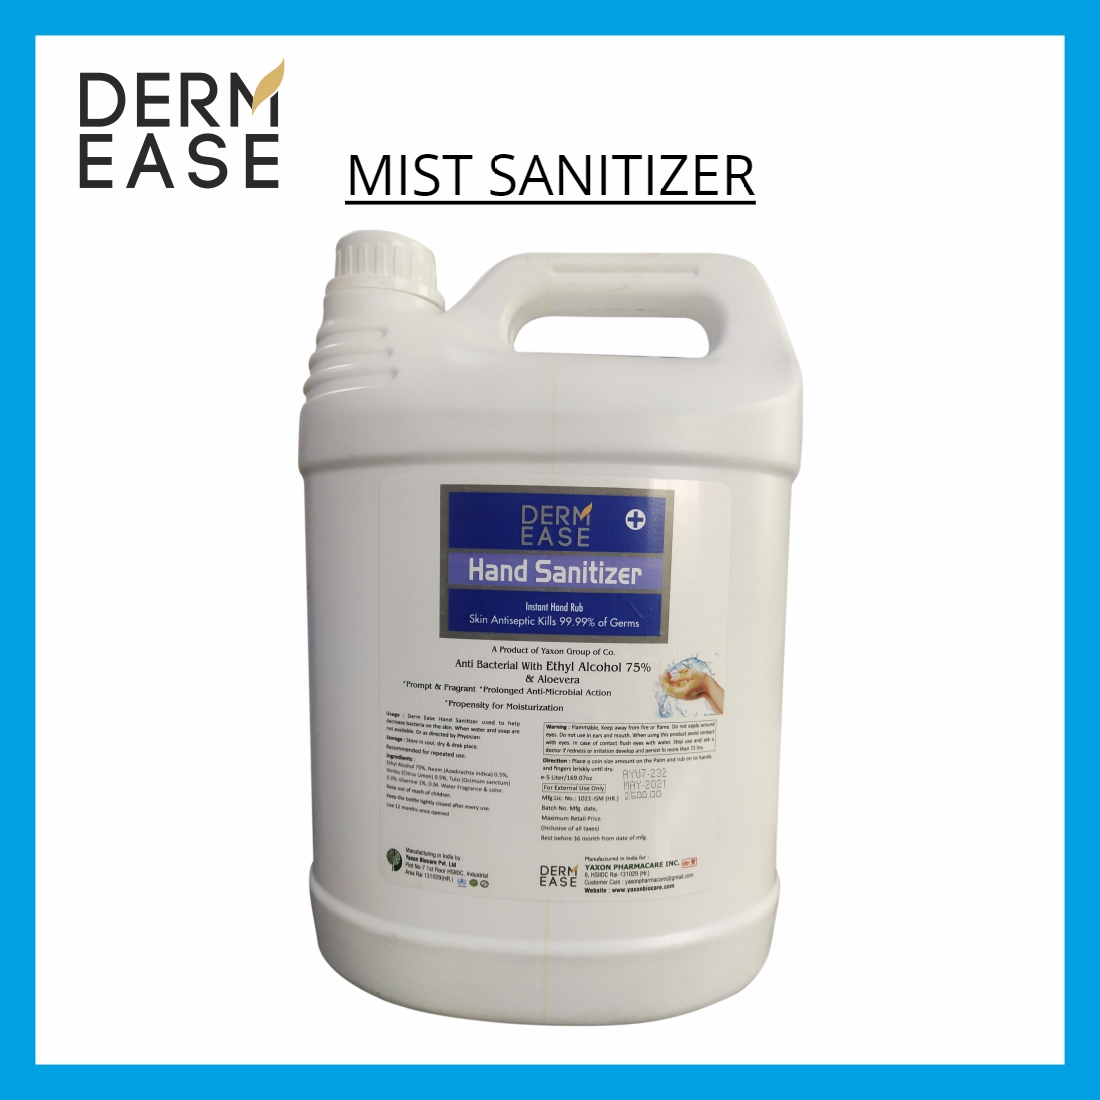 DERM EASE Mist Hand Sanitizer 5 Liter Can